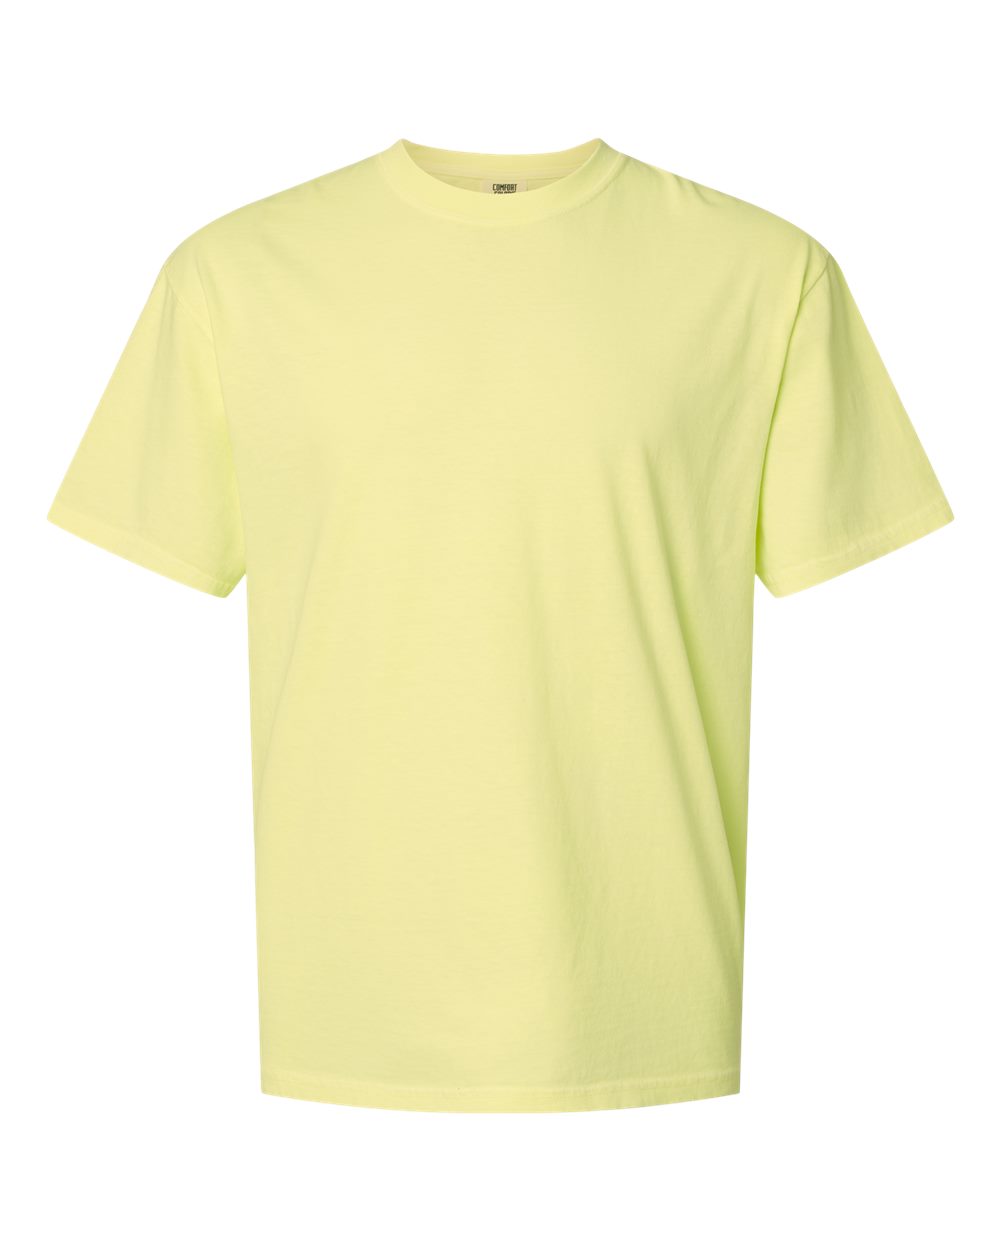 "Build A Tee" Neon - Comfort Colors Blank Short Sleeve T-Shirt